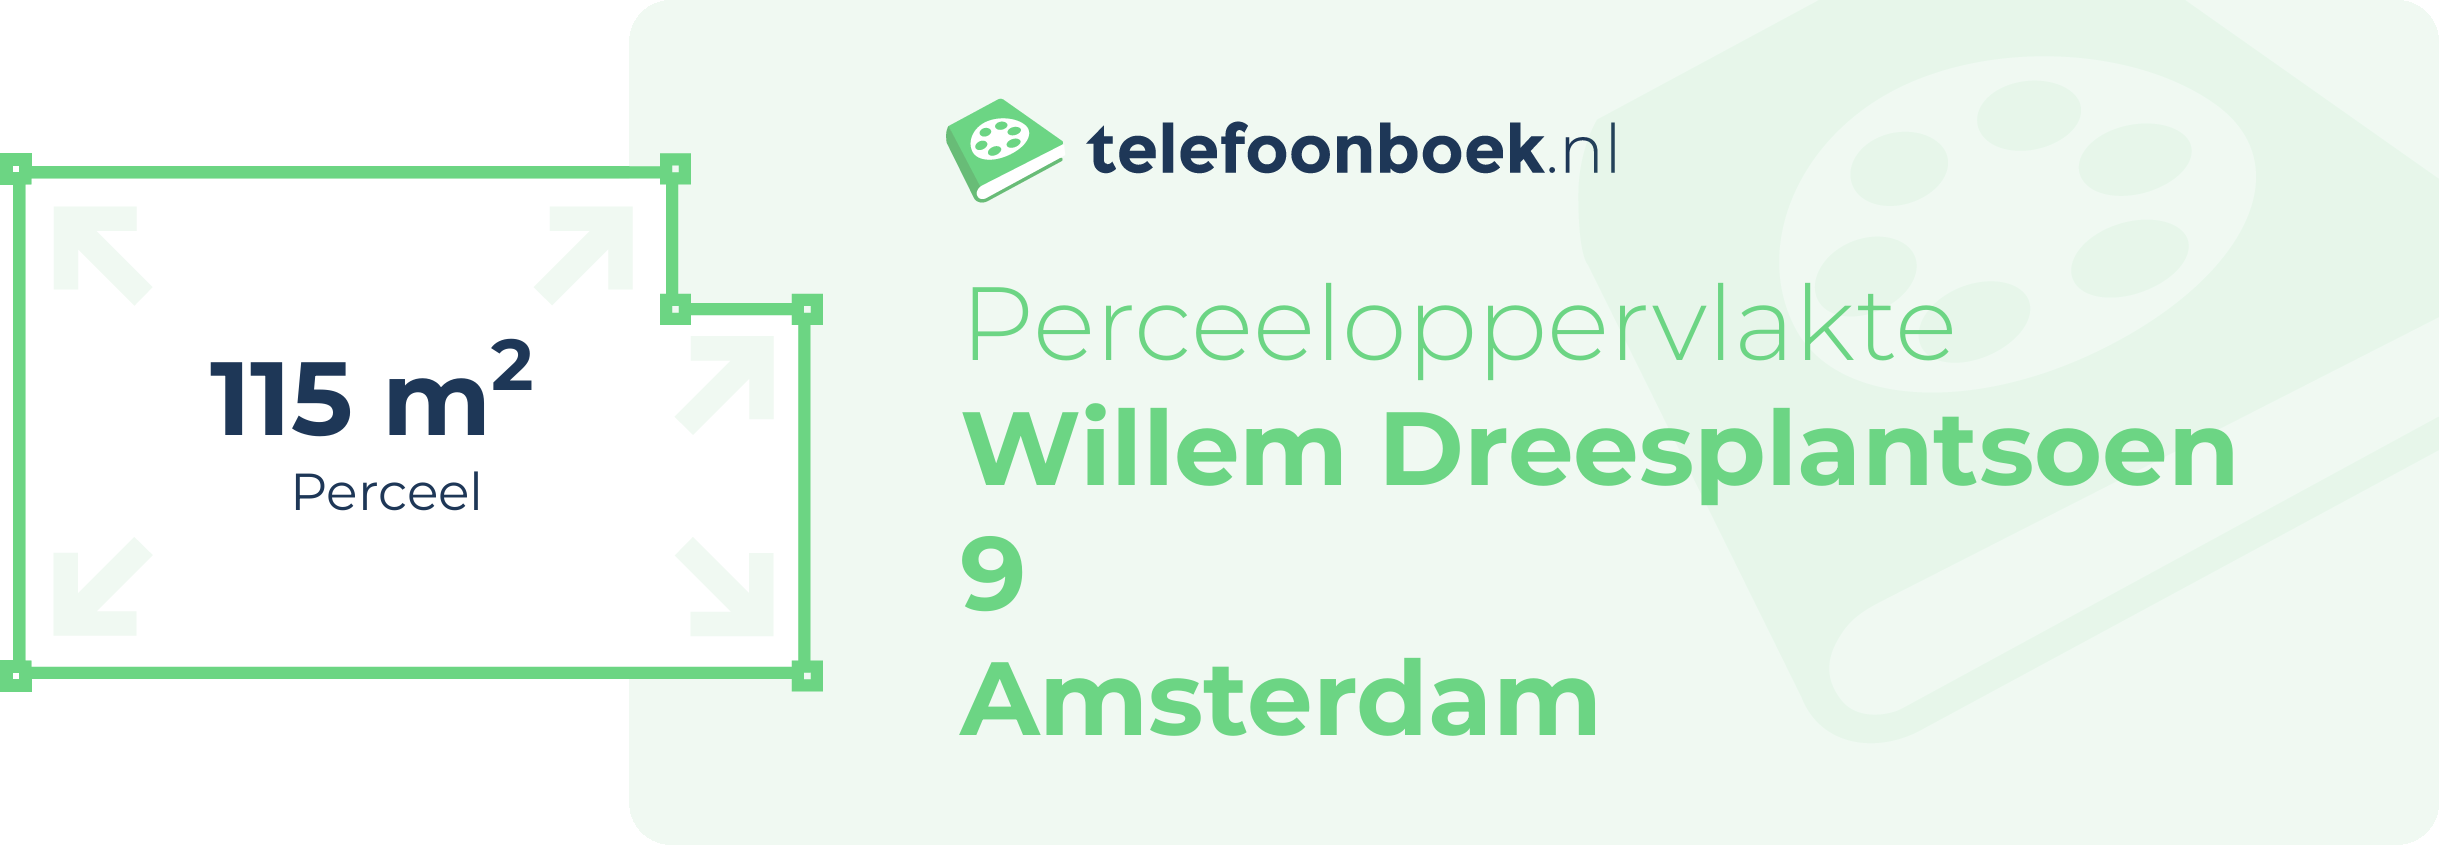 Perceeloppervlakte Willem Dreesplantsoen 9 Amsterdam